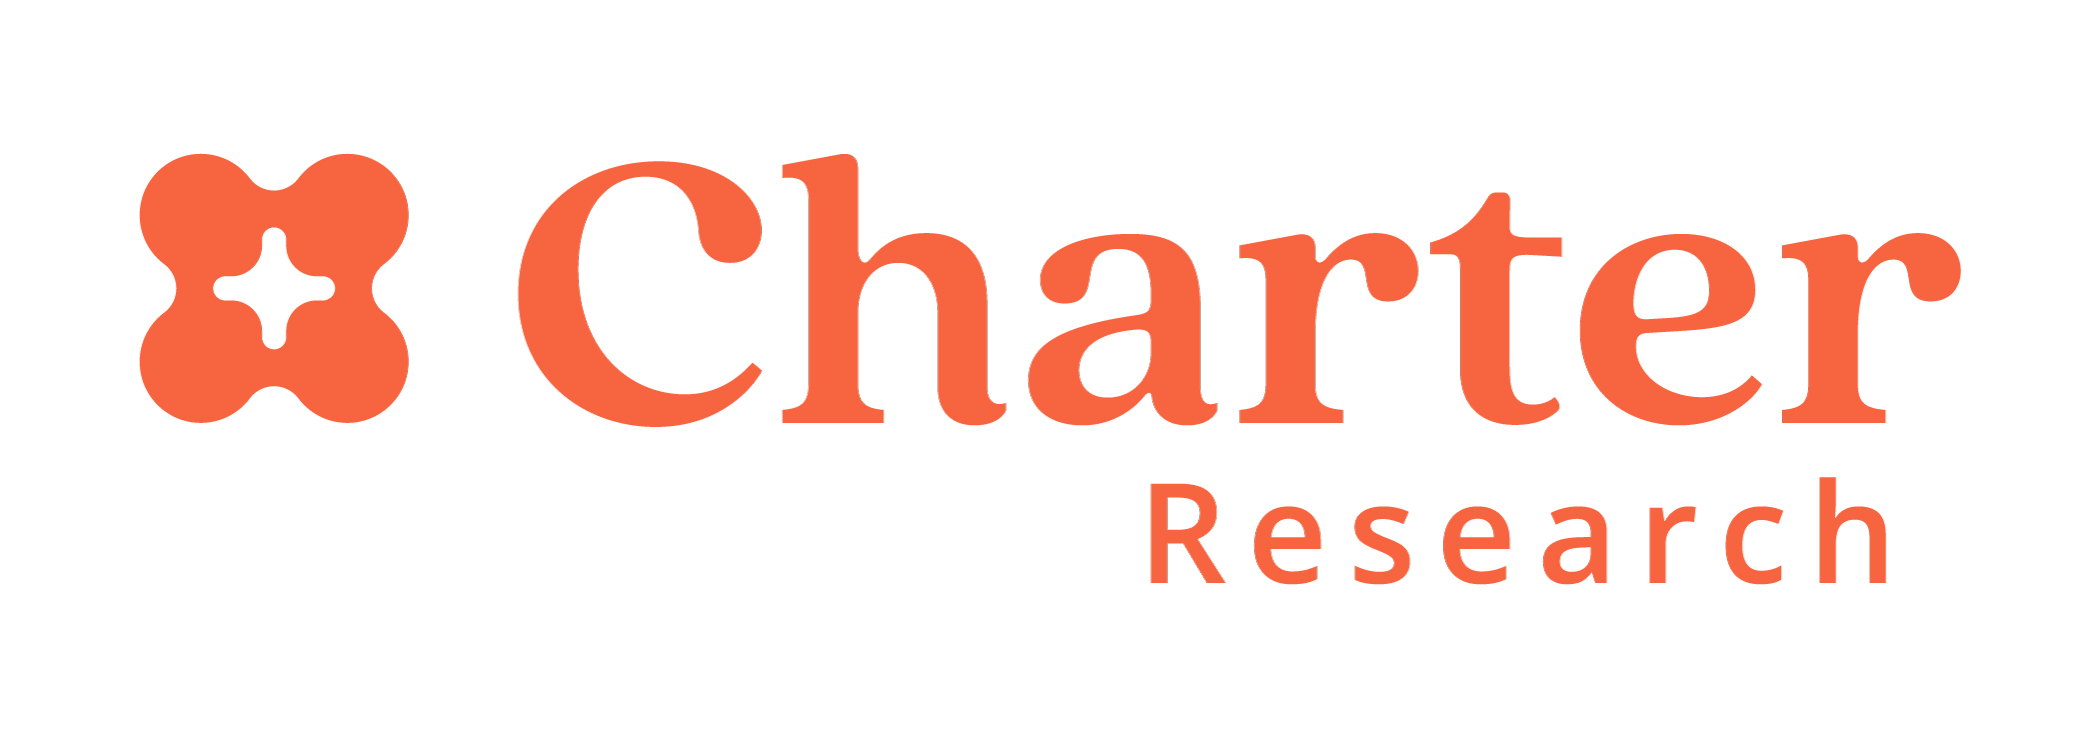 Charter Research Company Logo